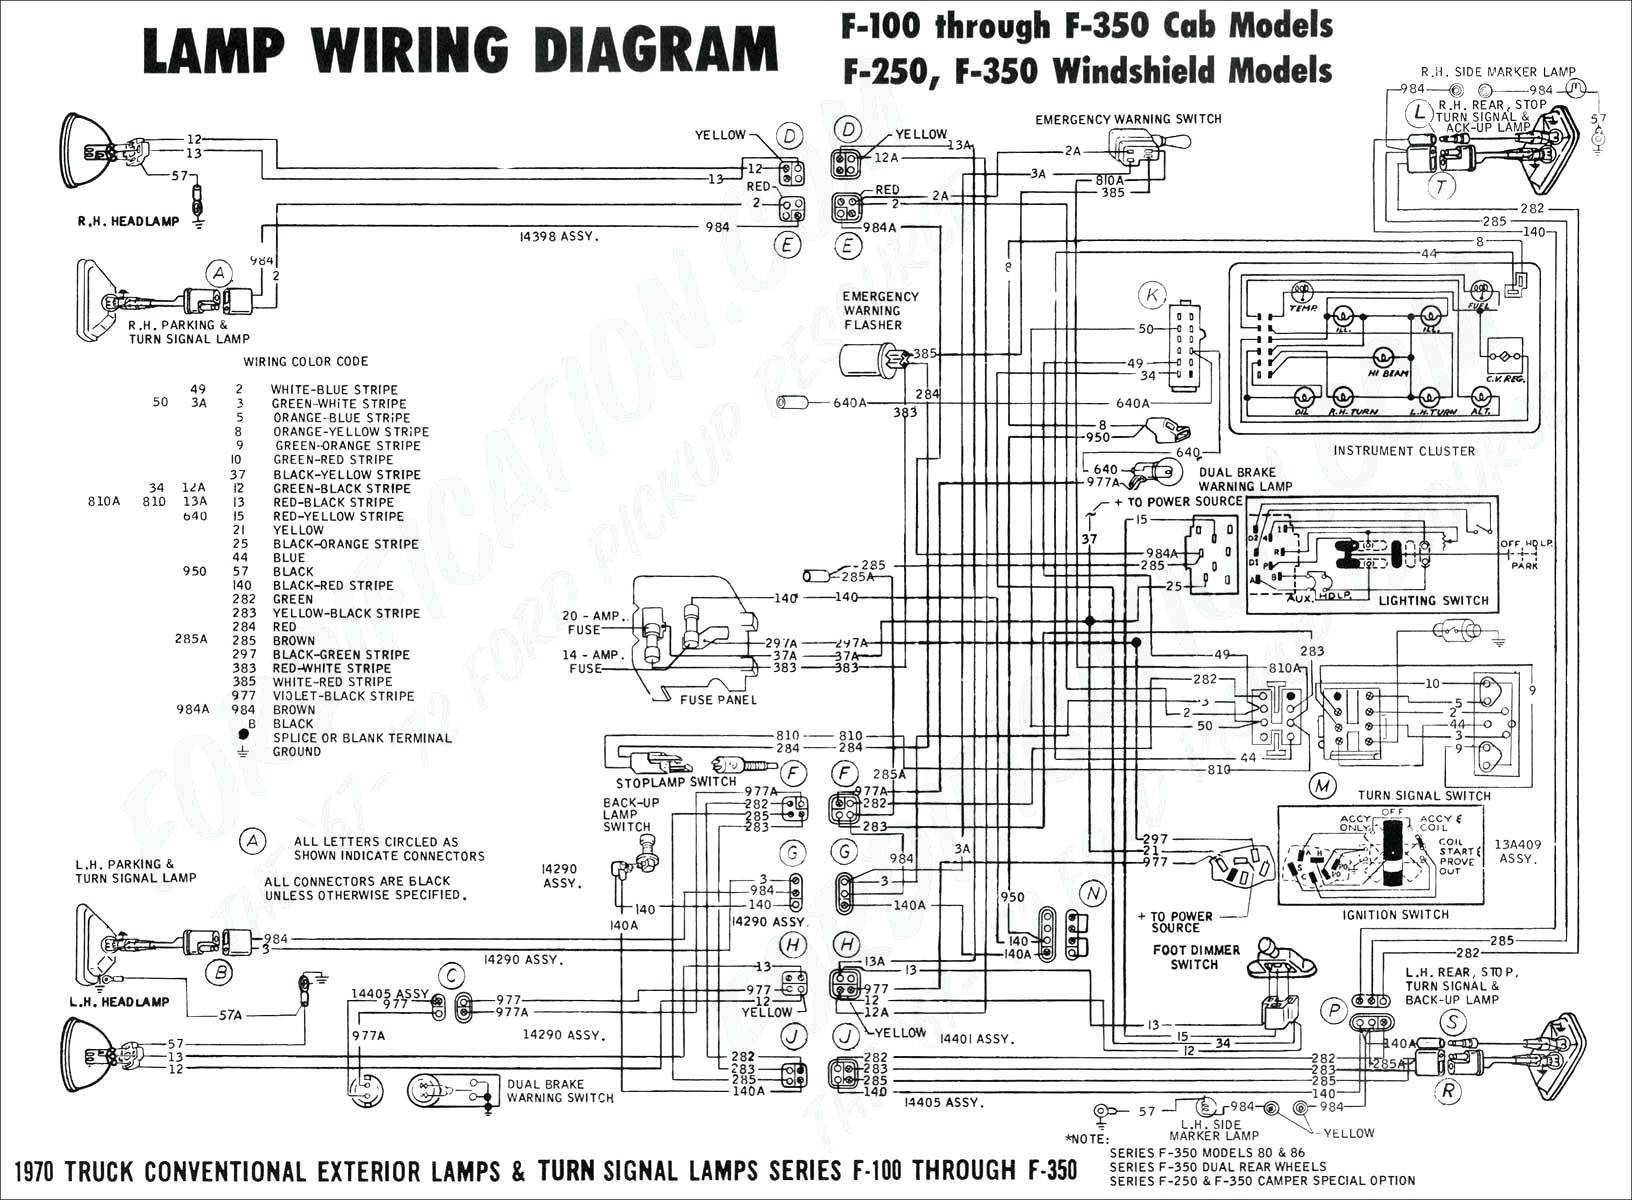 Trailer Wiring Harness Diagram ford F150 Trailer Wiring Harness Diagram Inspirational ford F150 Of Trailer Wiring Harness Diagram